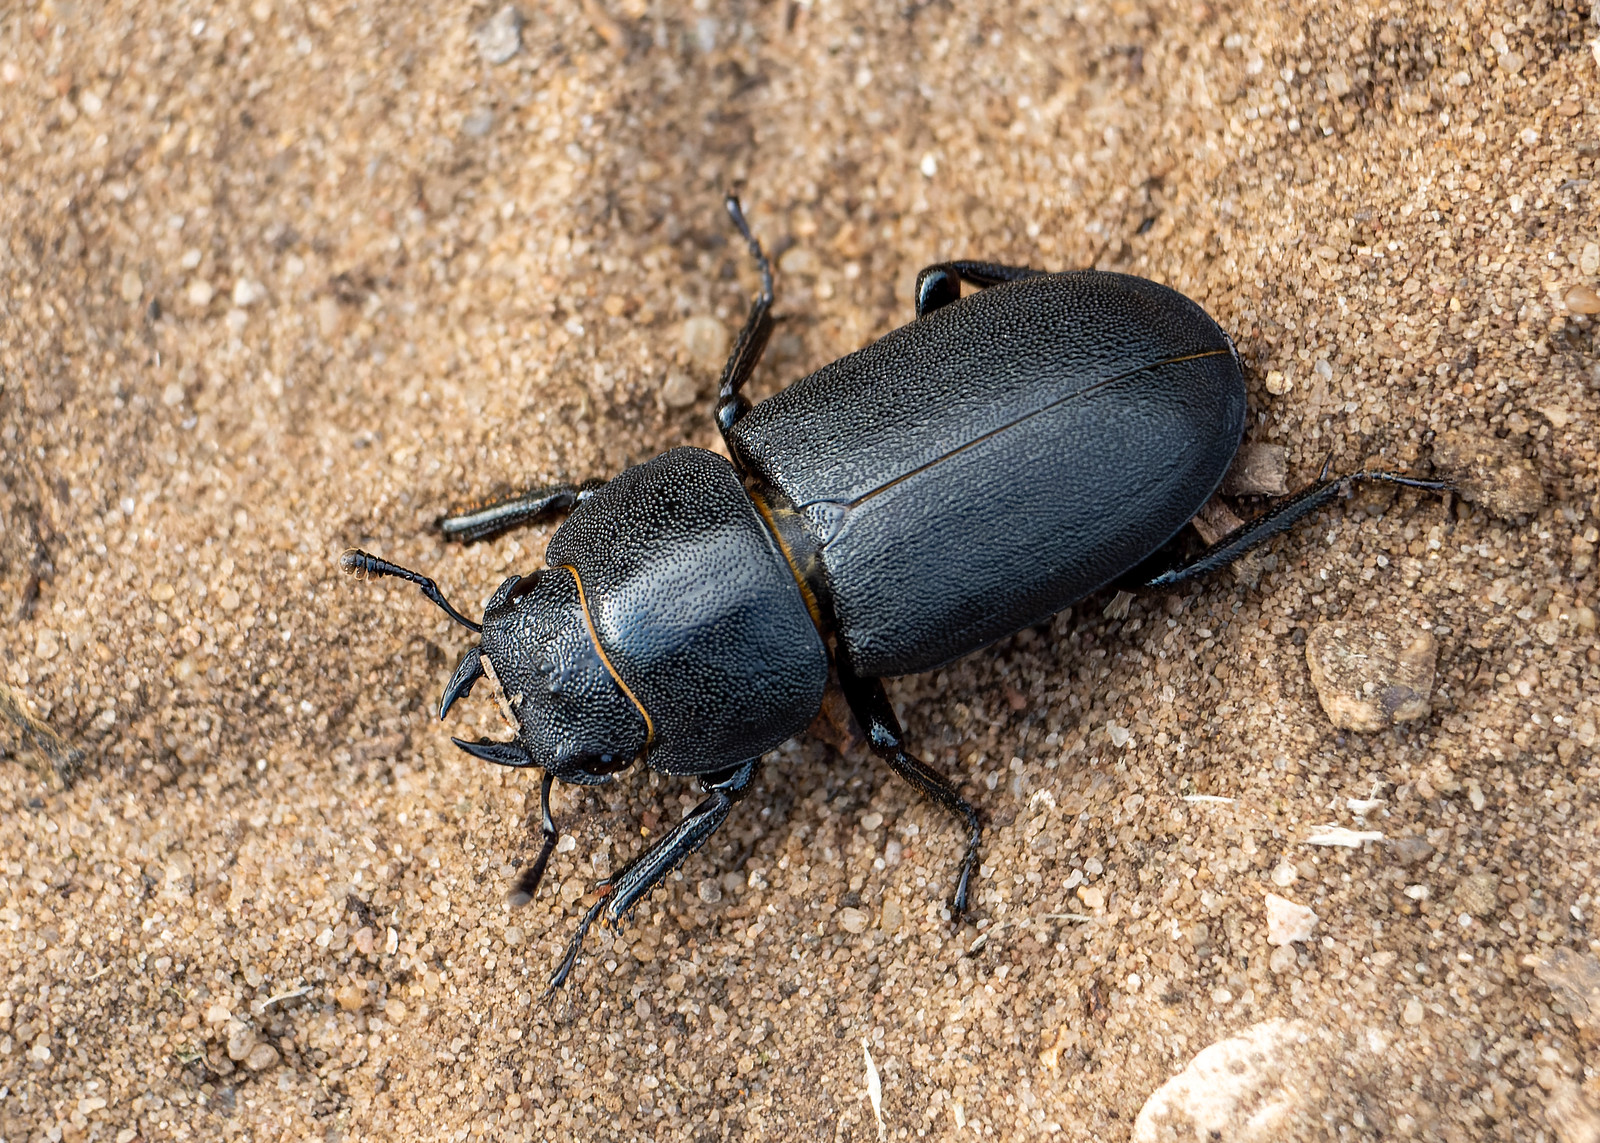 Lesser Stag Beetle - Dorcus parallelipipedus